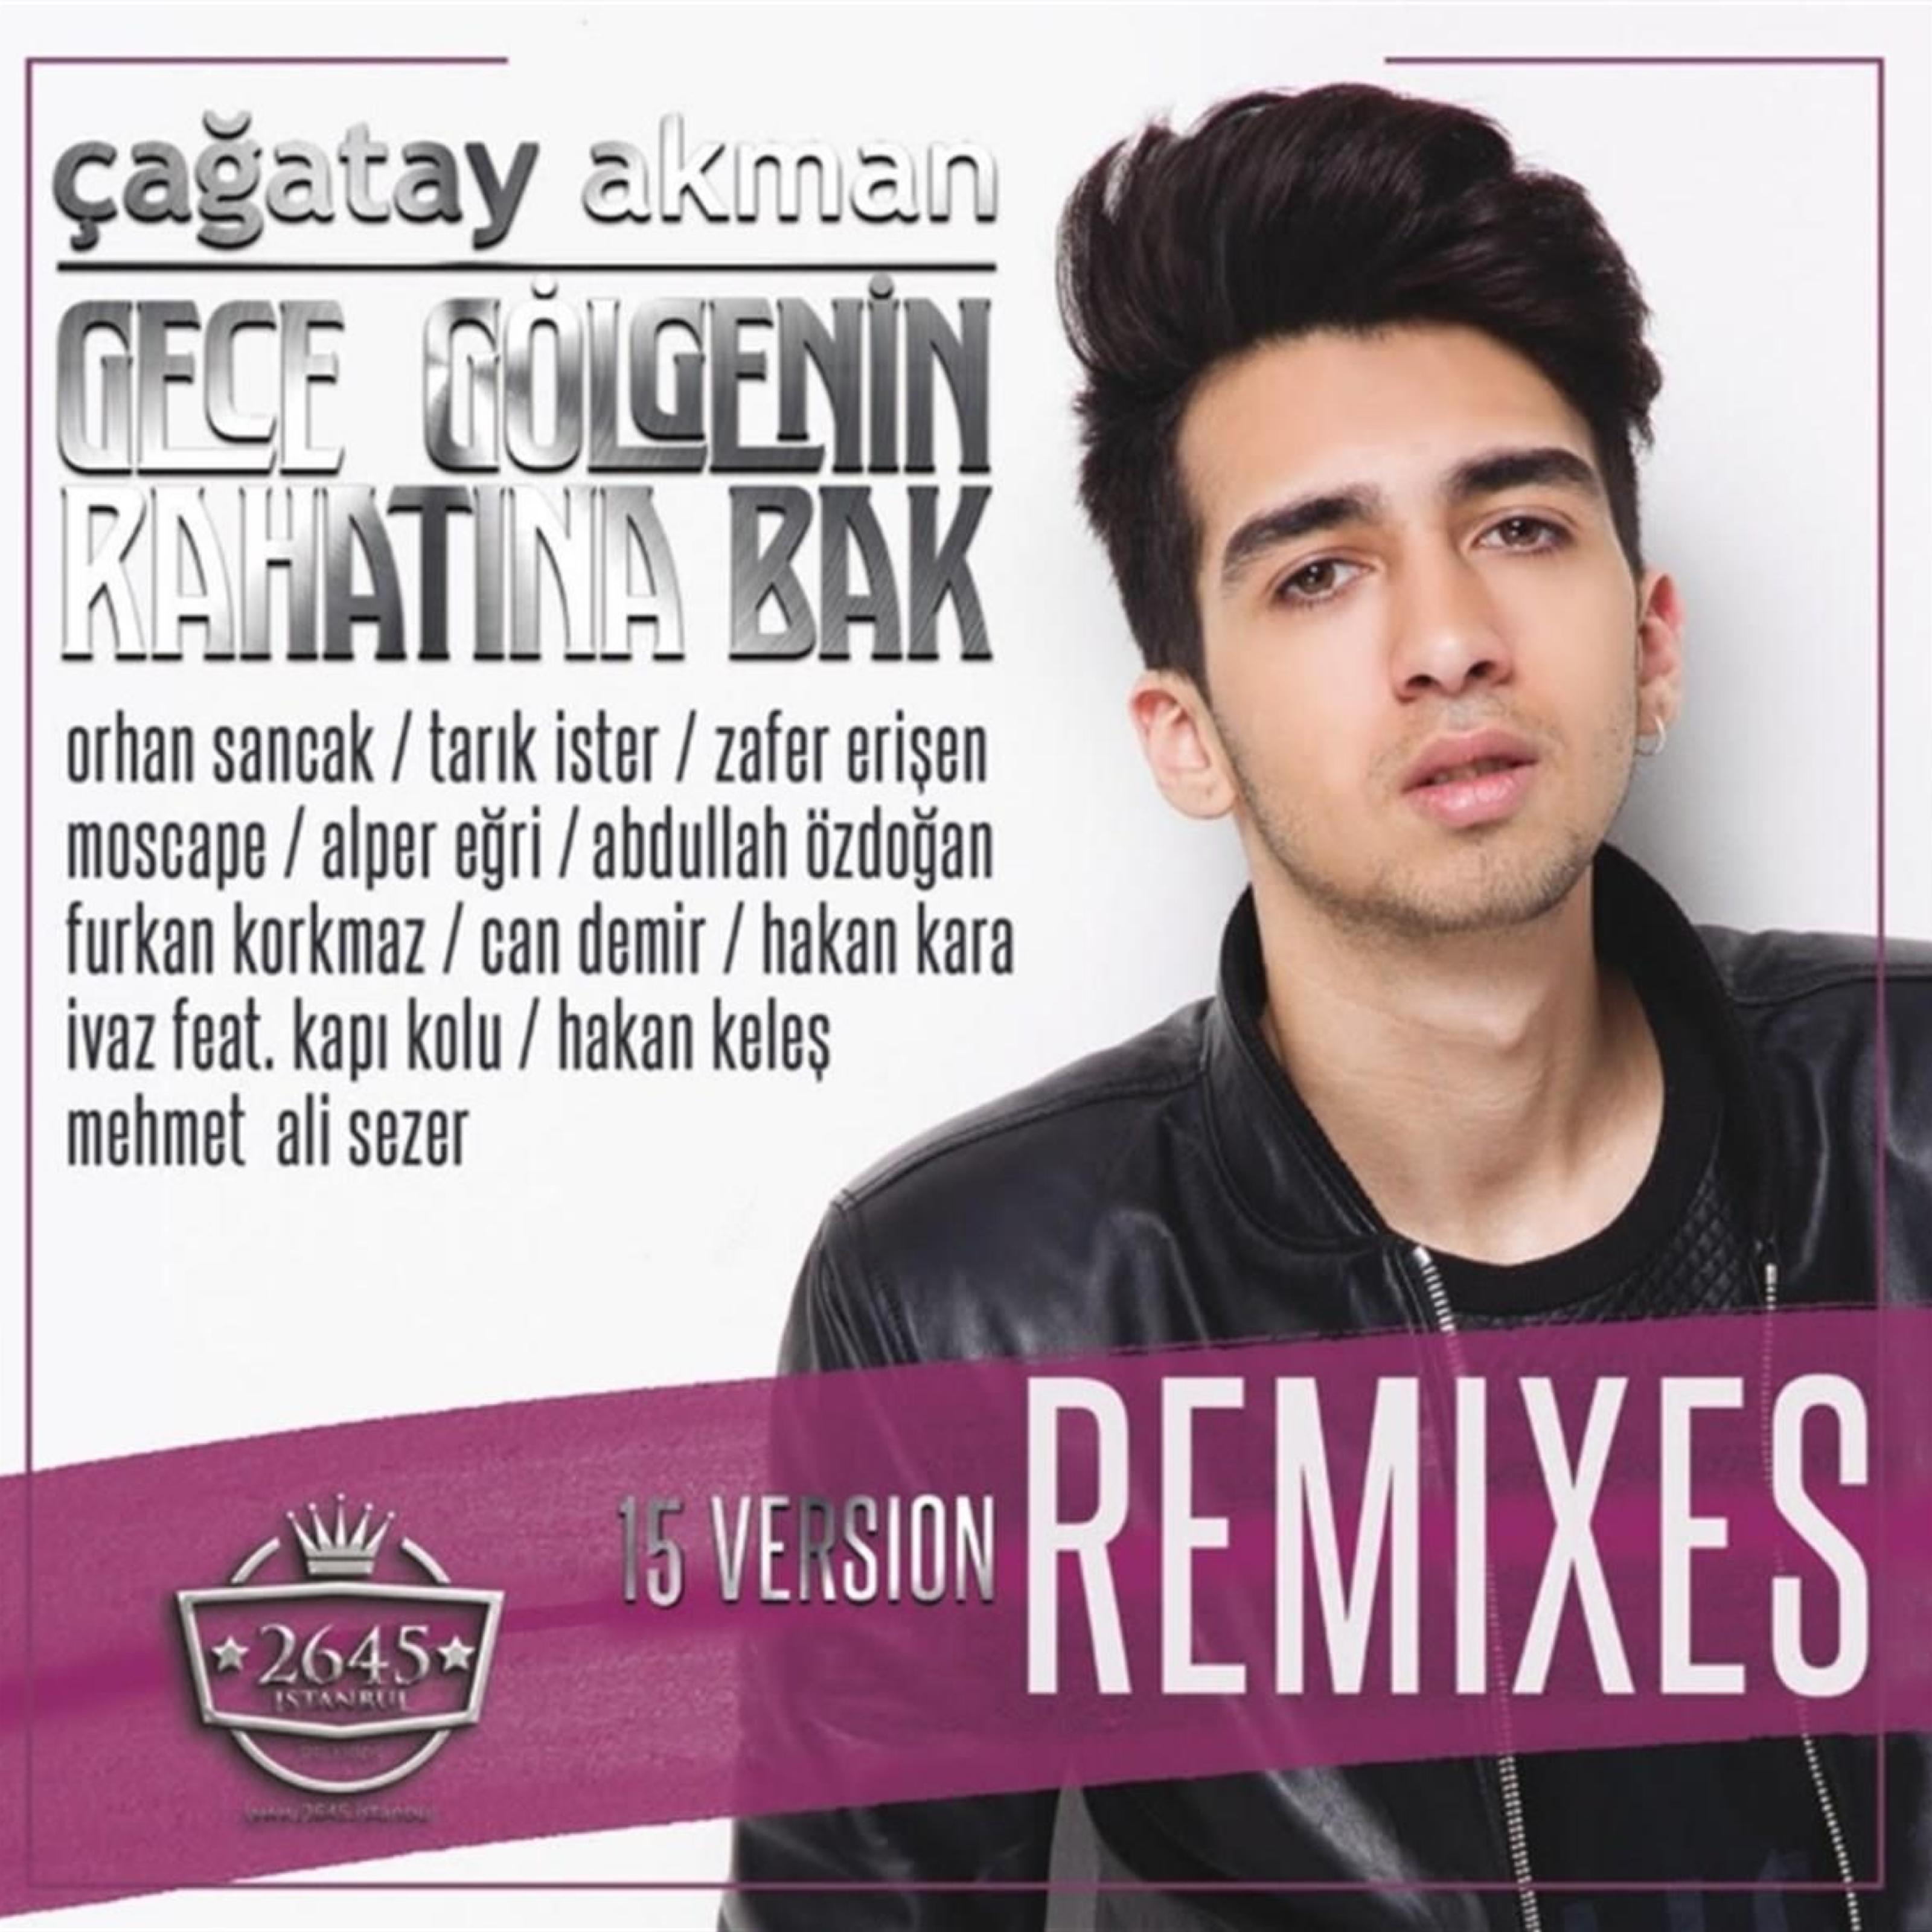 Çağatay Akman - Gece Gölgenin Rahatına Bak Remixes